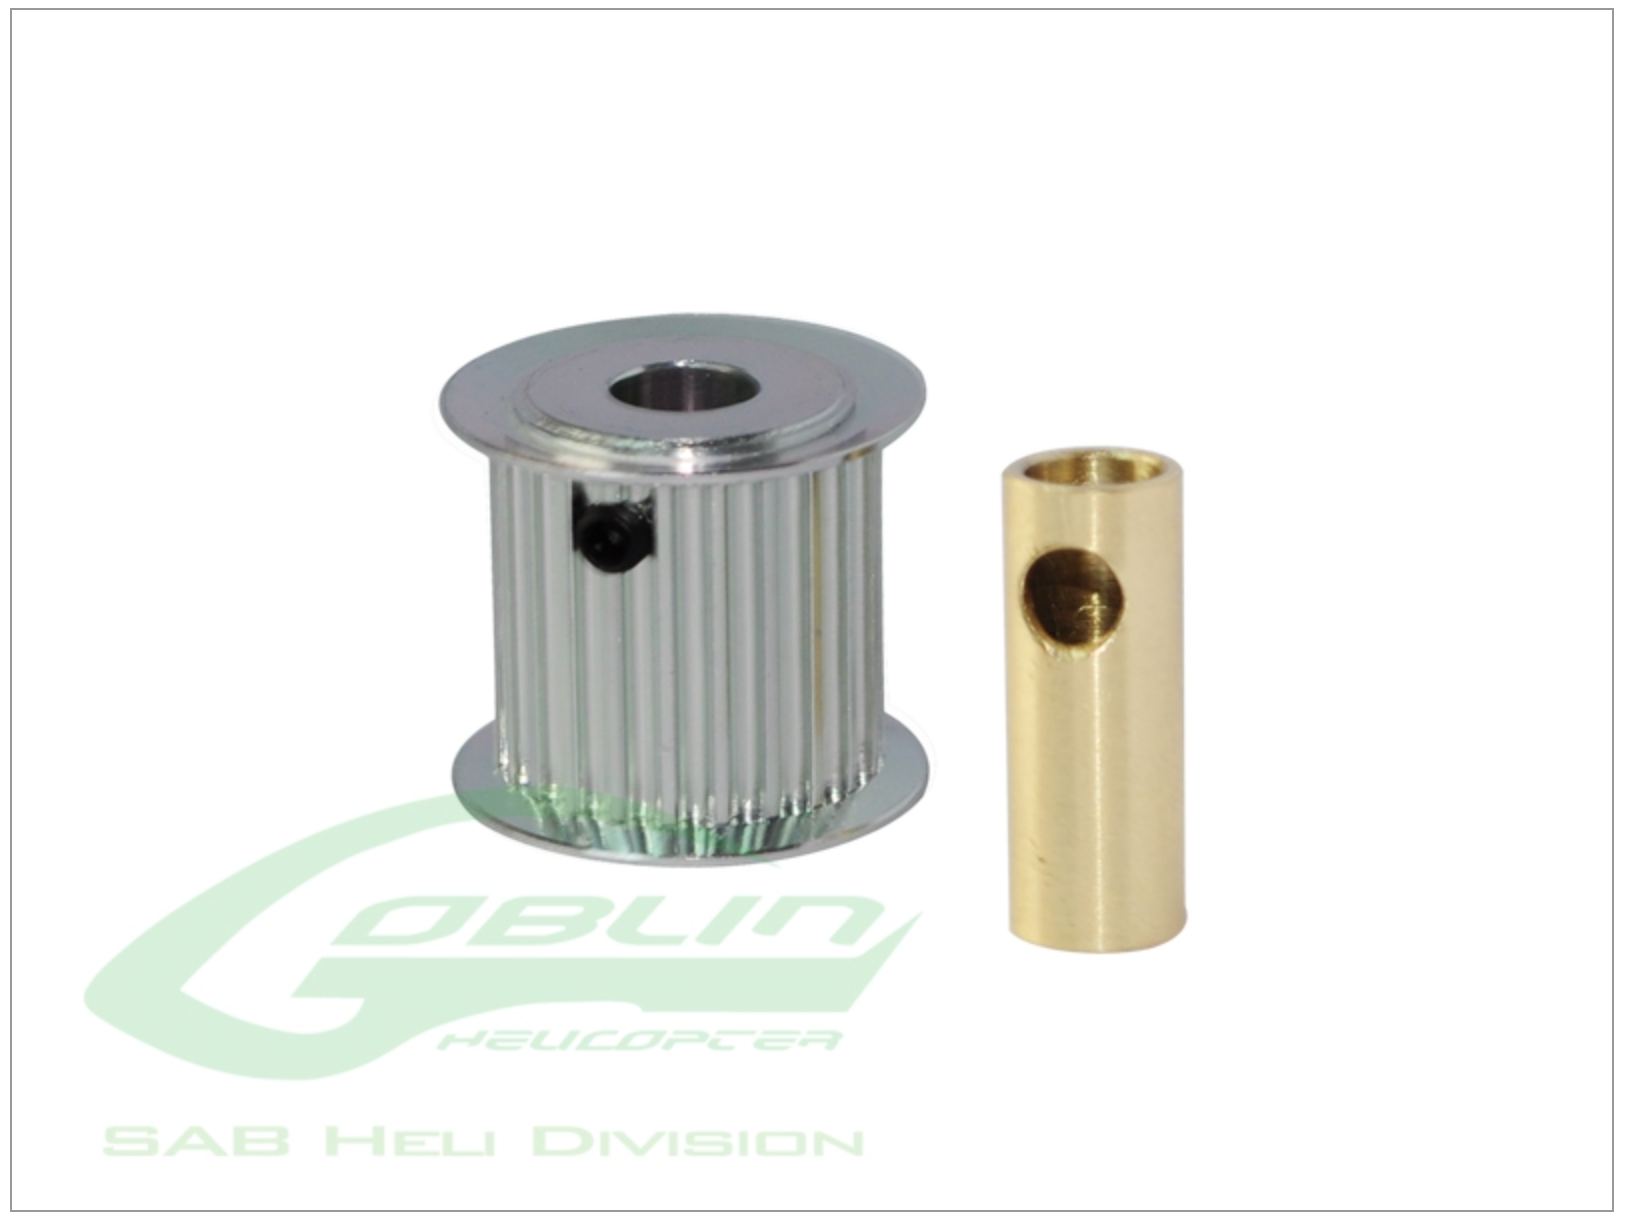 H0175-20-S Aluminum Motor Pulley 20T (for 6/8mm motor shaft)